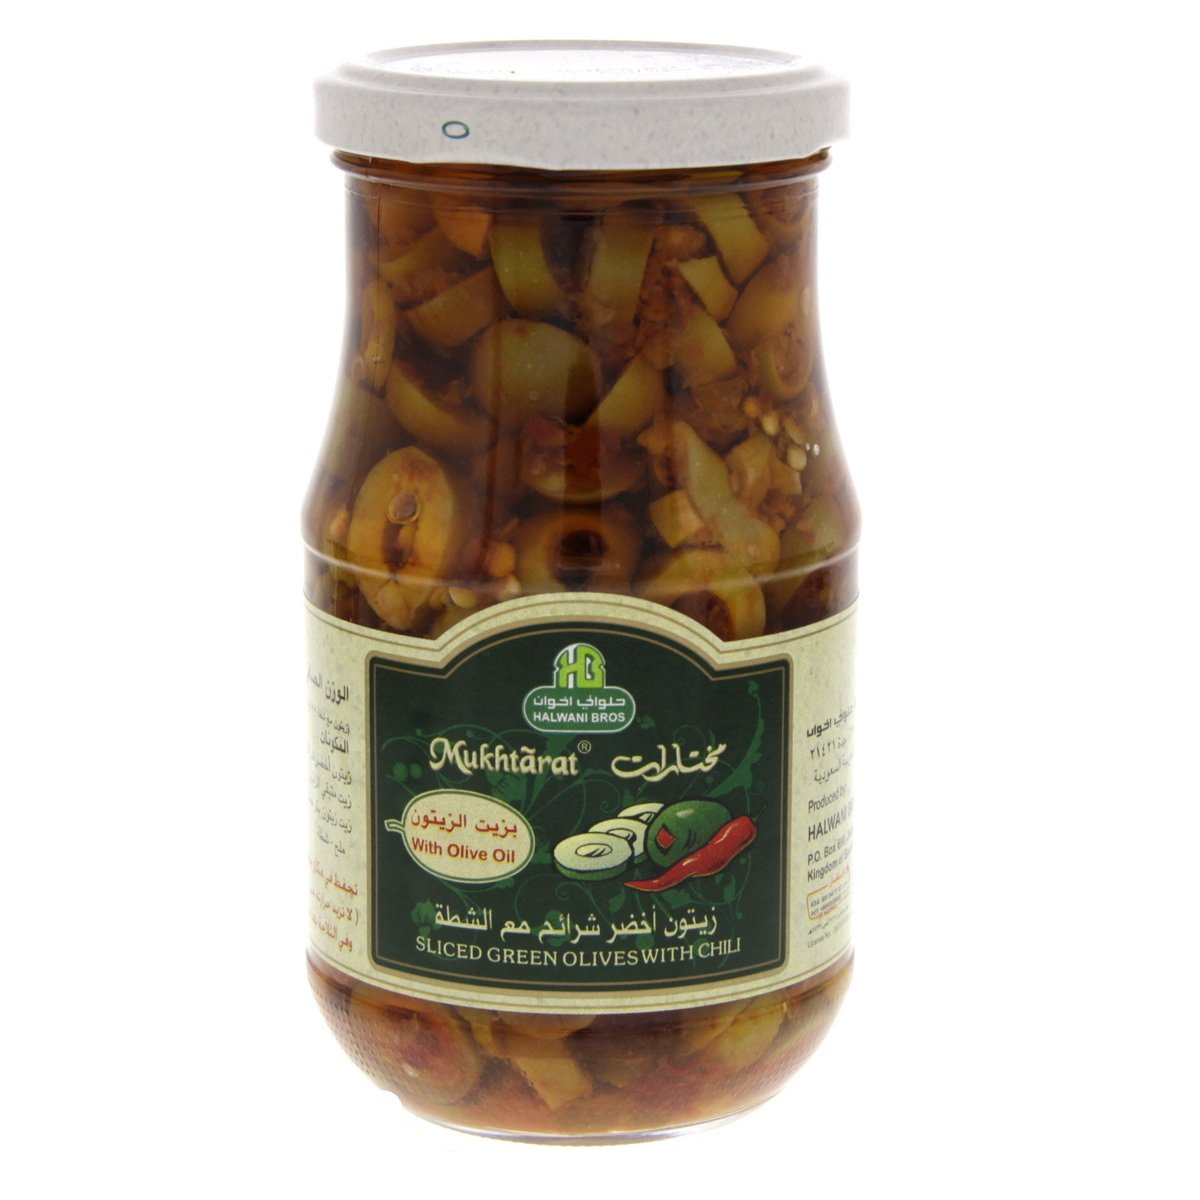 Halwani Bros Mukhtarat Sliced Green Olives With Chilli 325 g